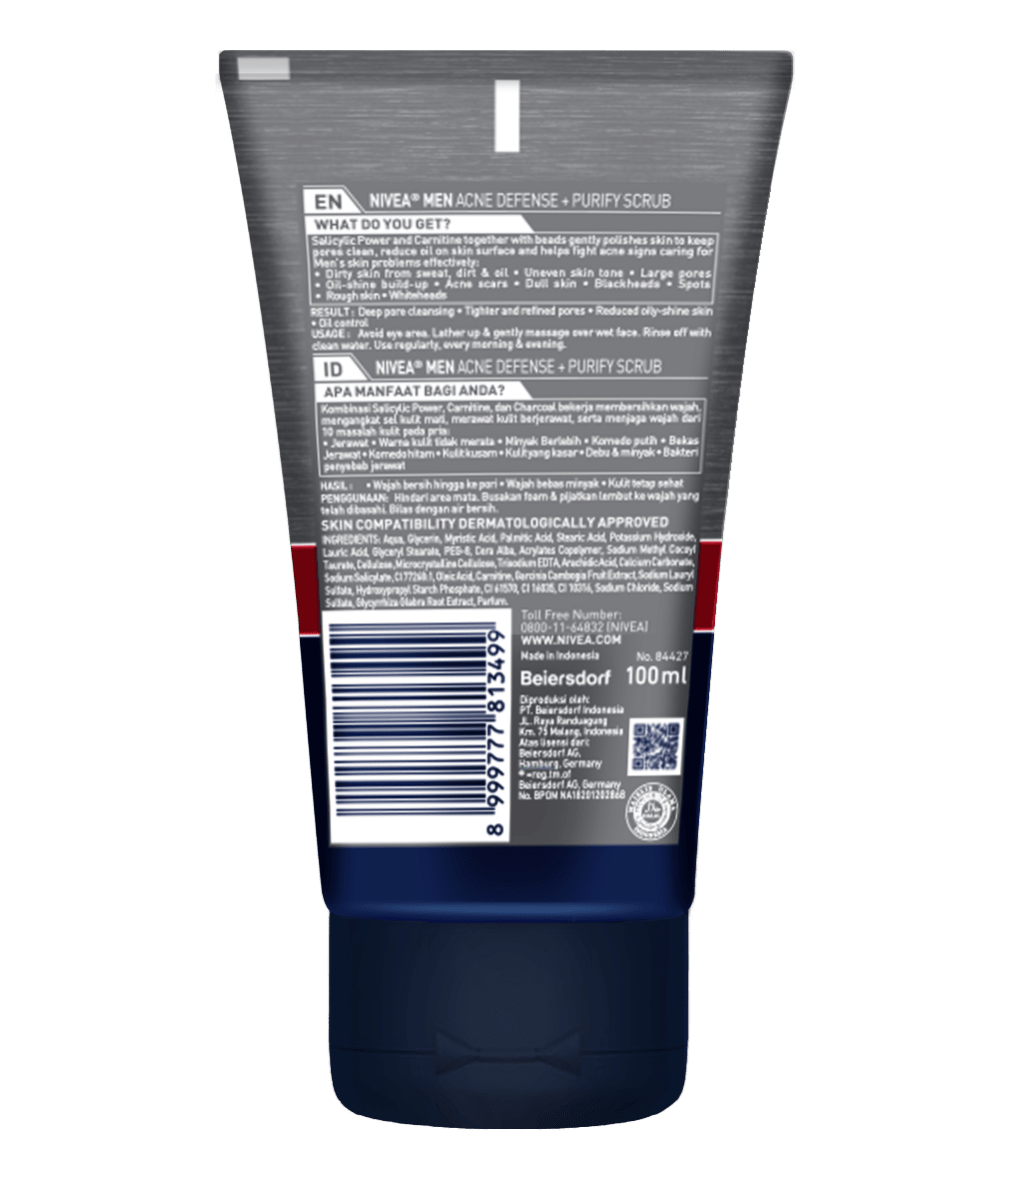 NIVEA MEN Acne Defense + Purify Scrub Back Label Packshot